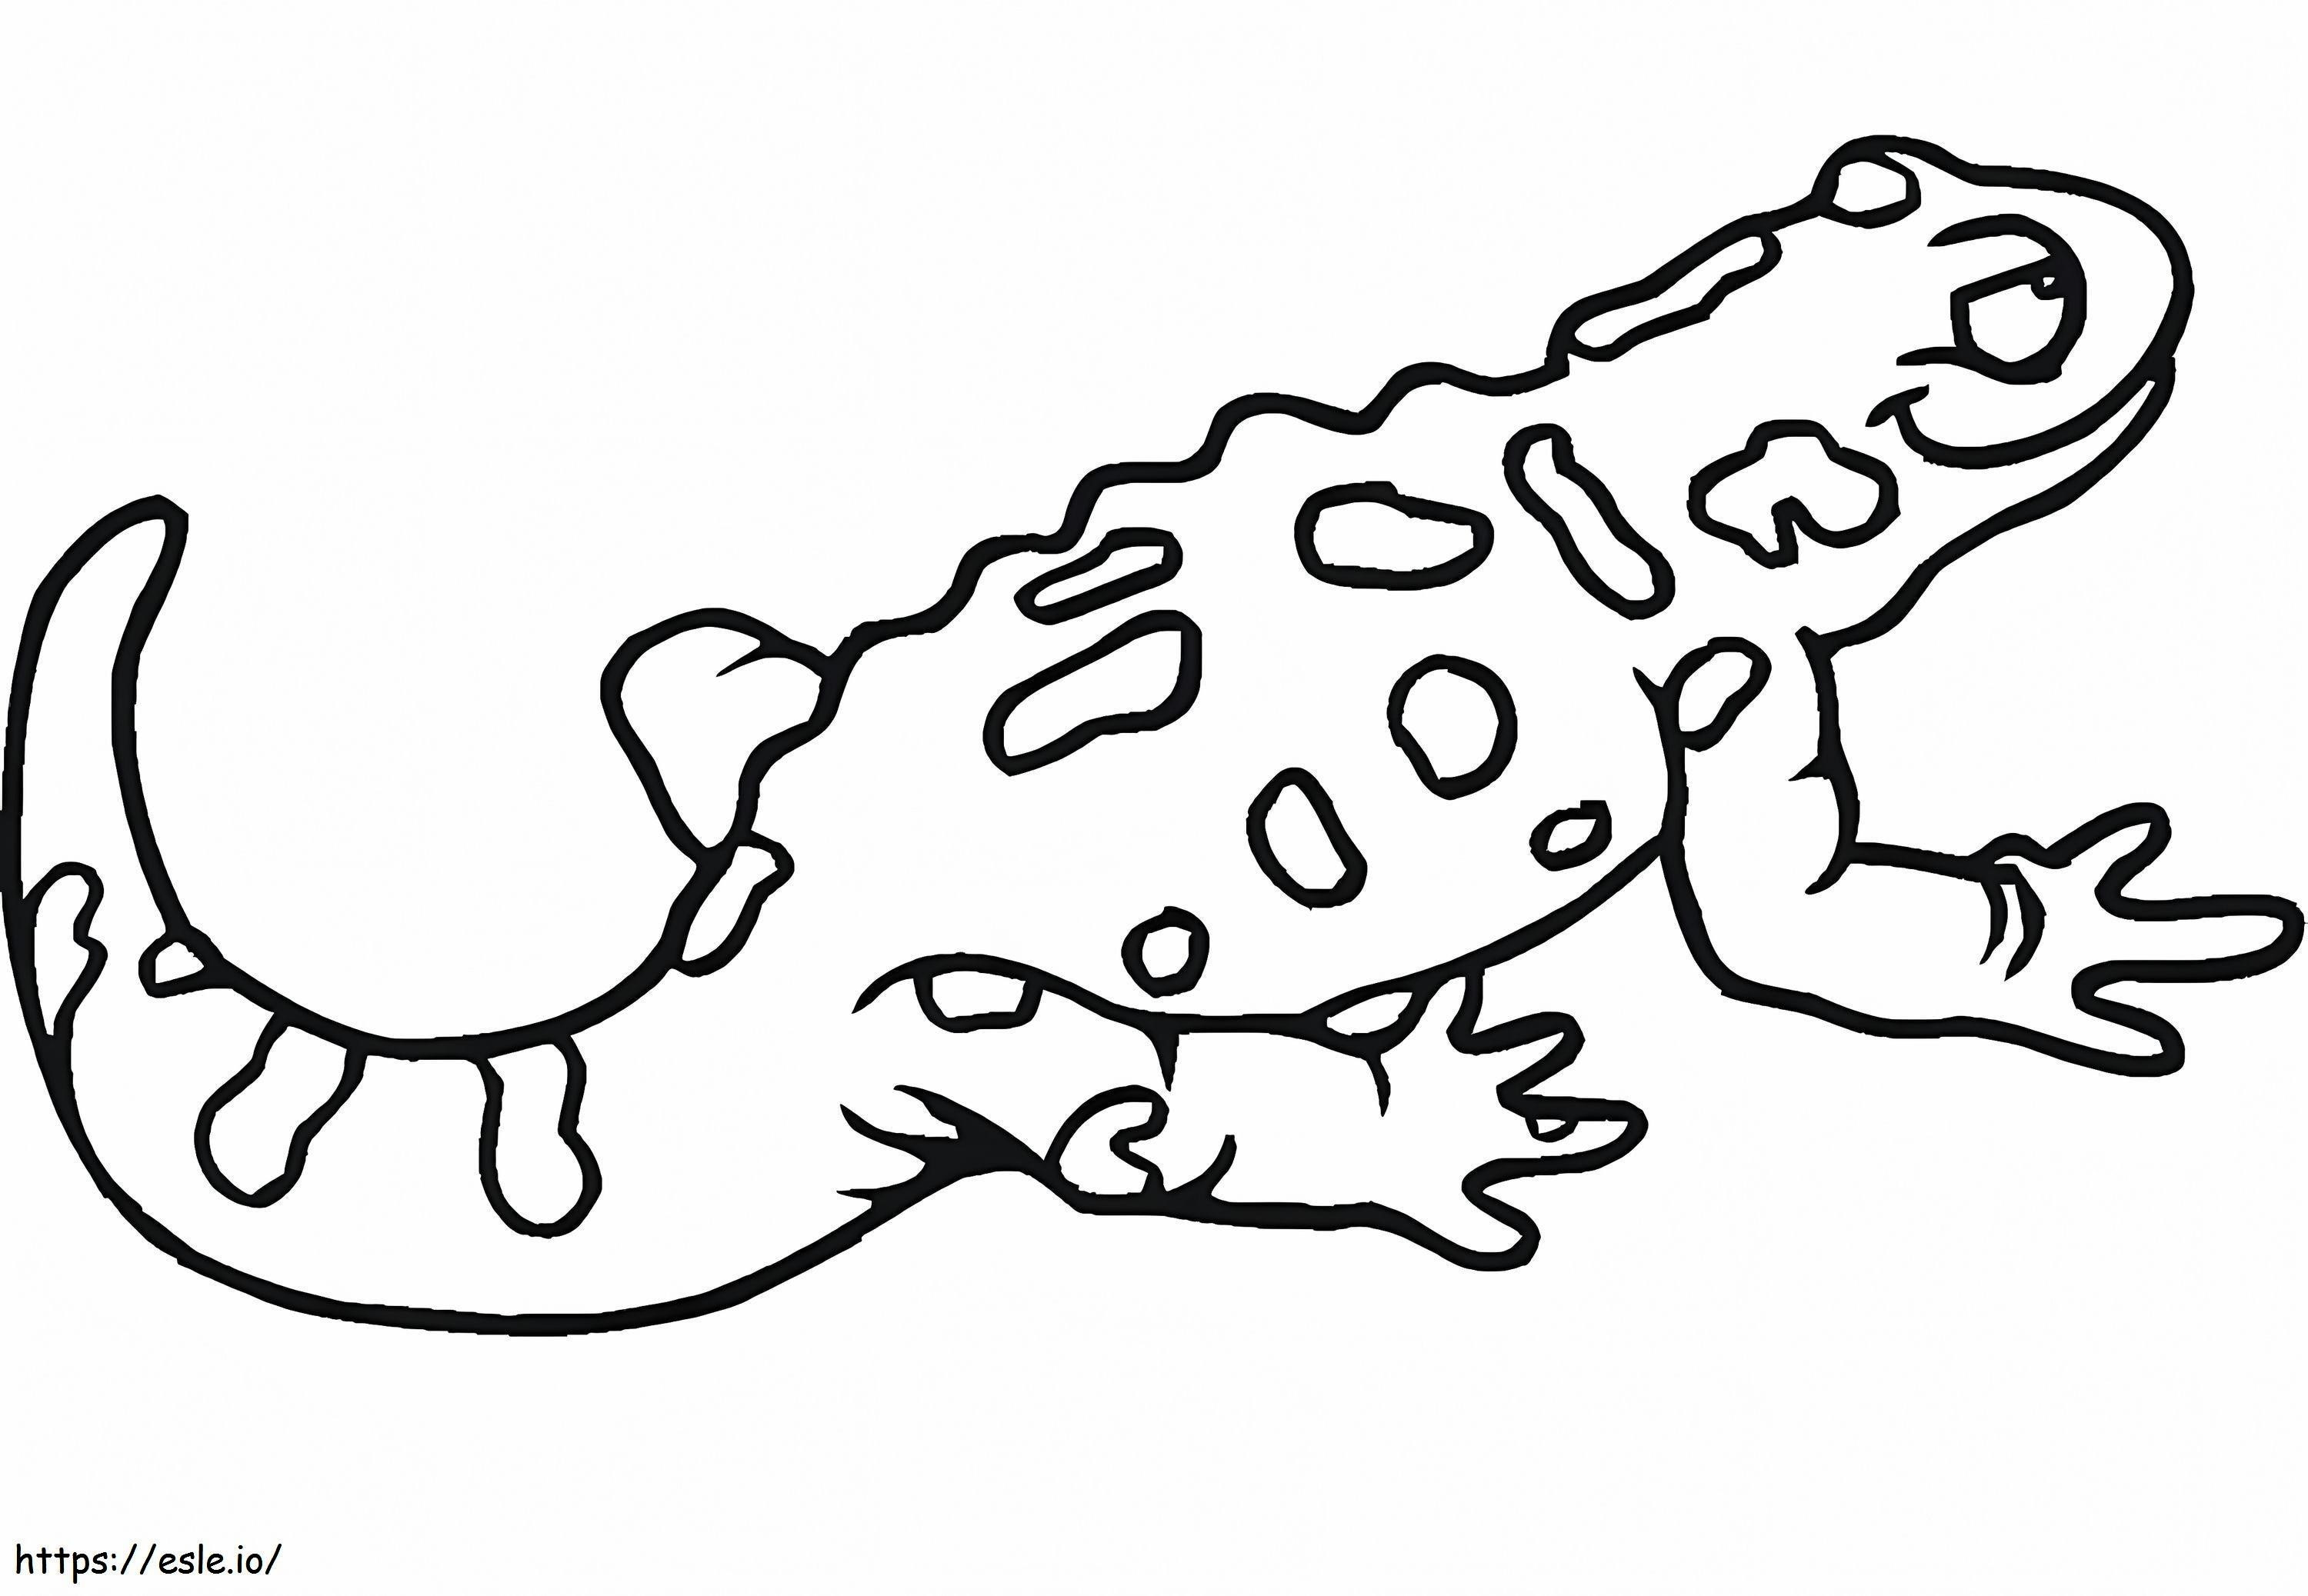 Salamander Smiling coloring page